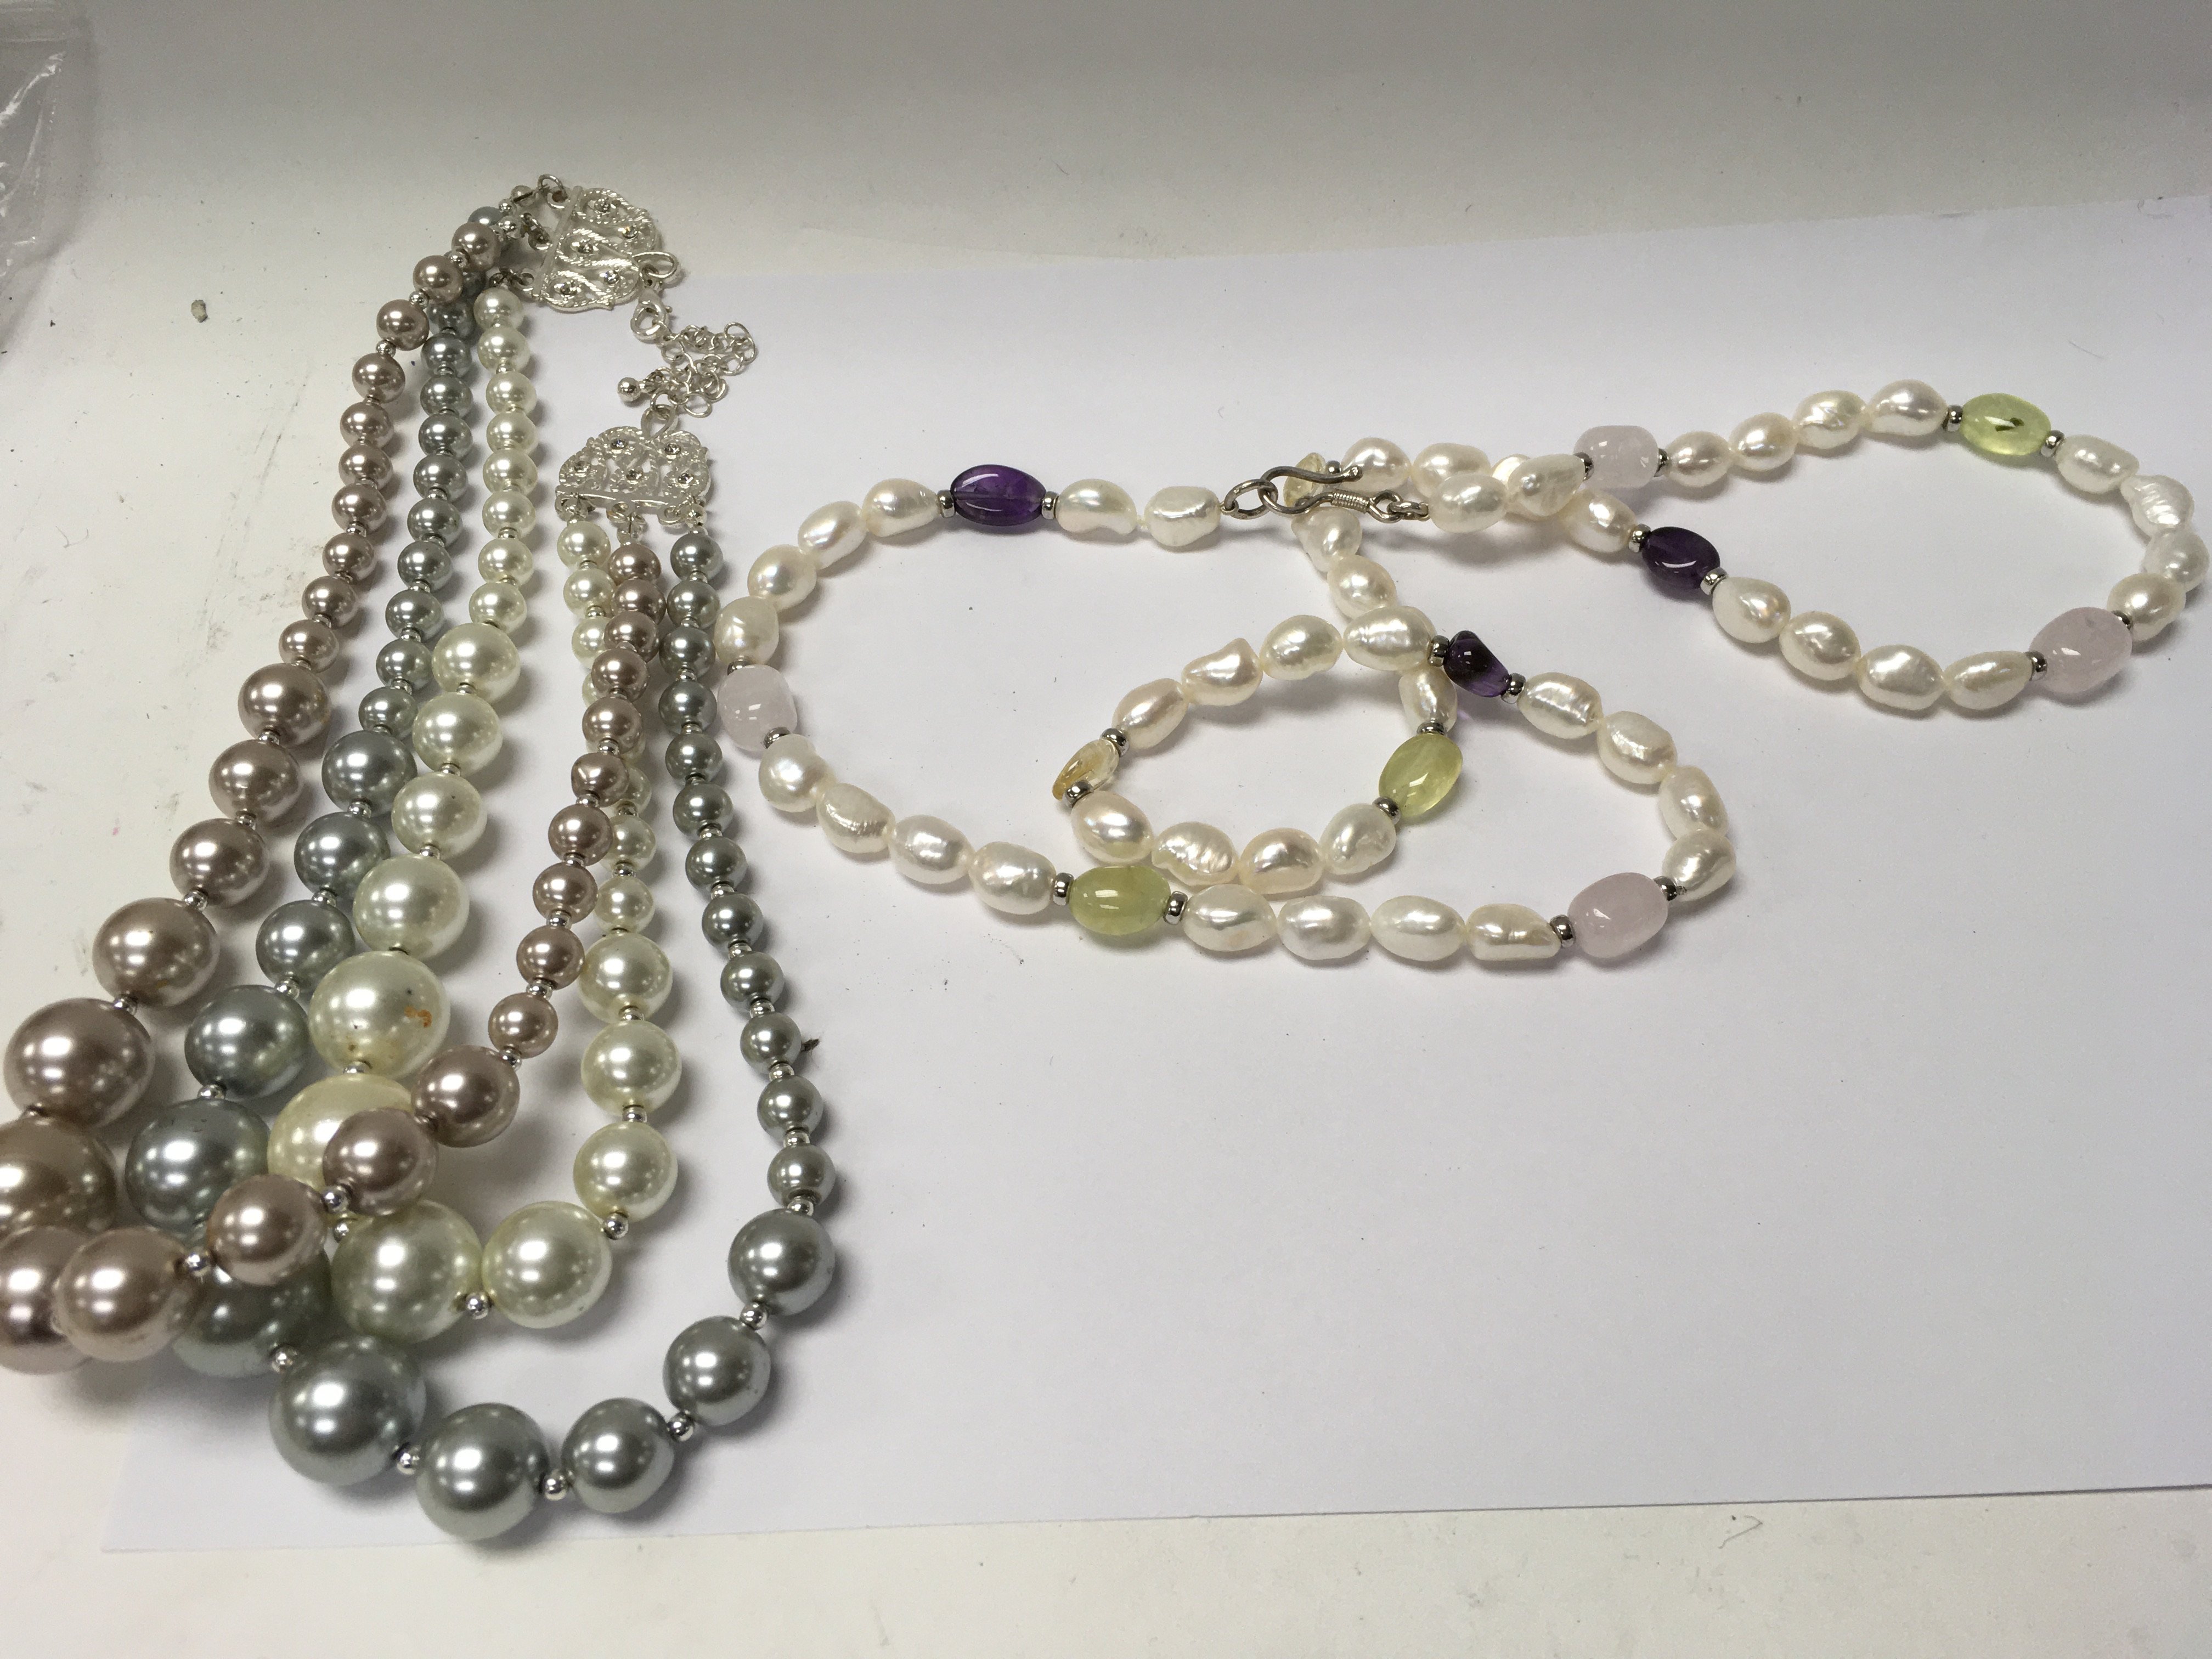 Two decorative costume pearl costume necklaces.